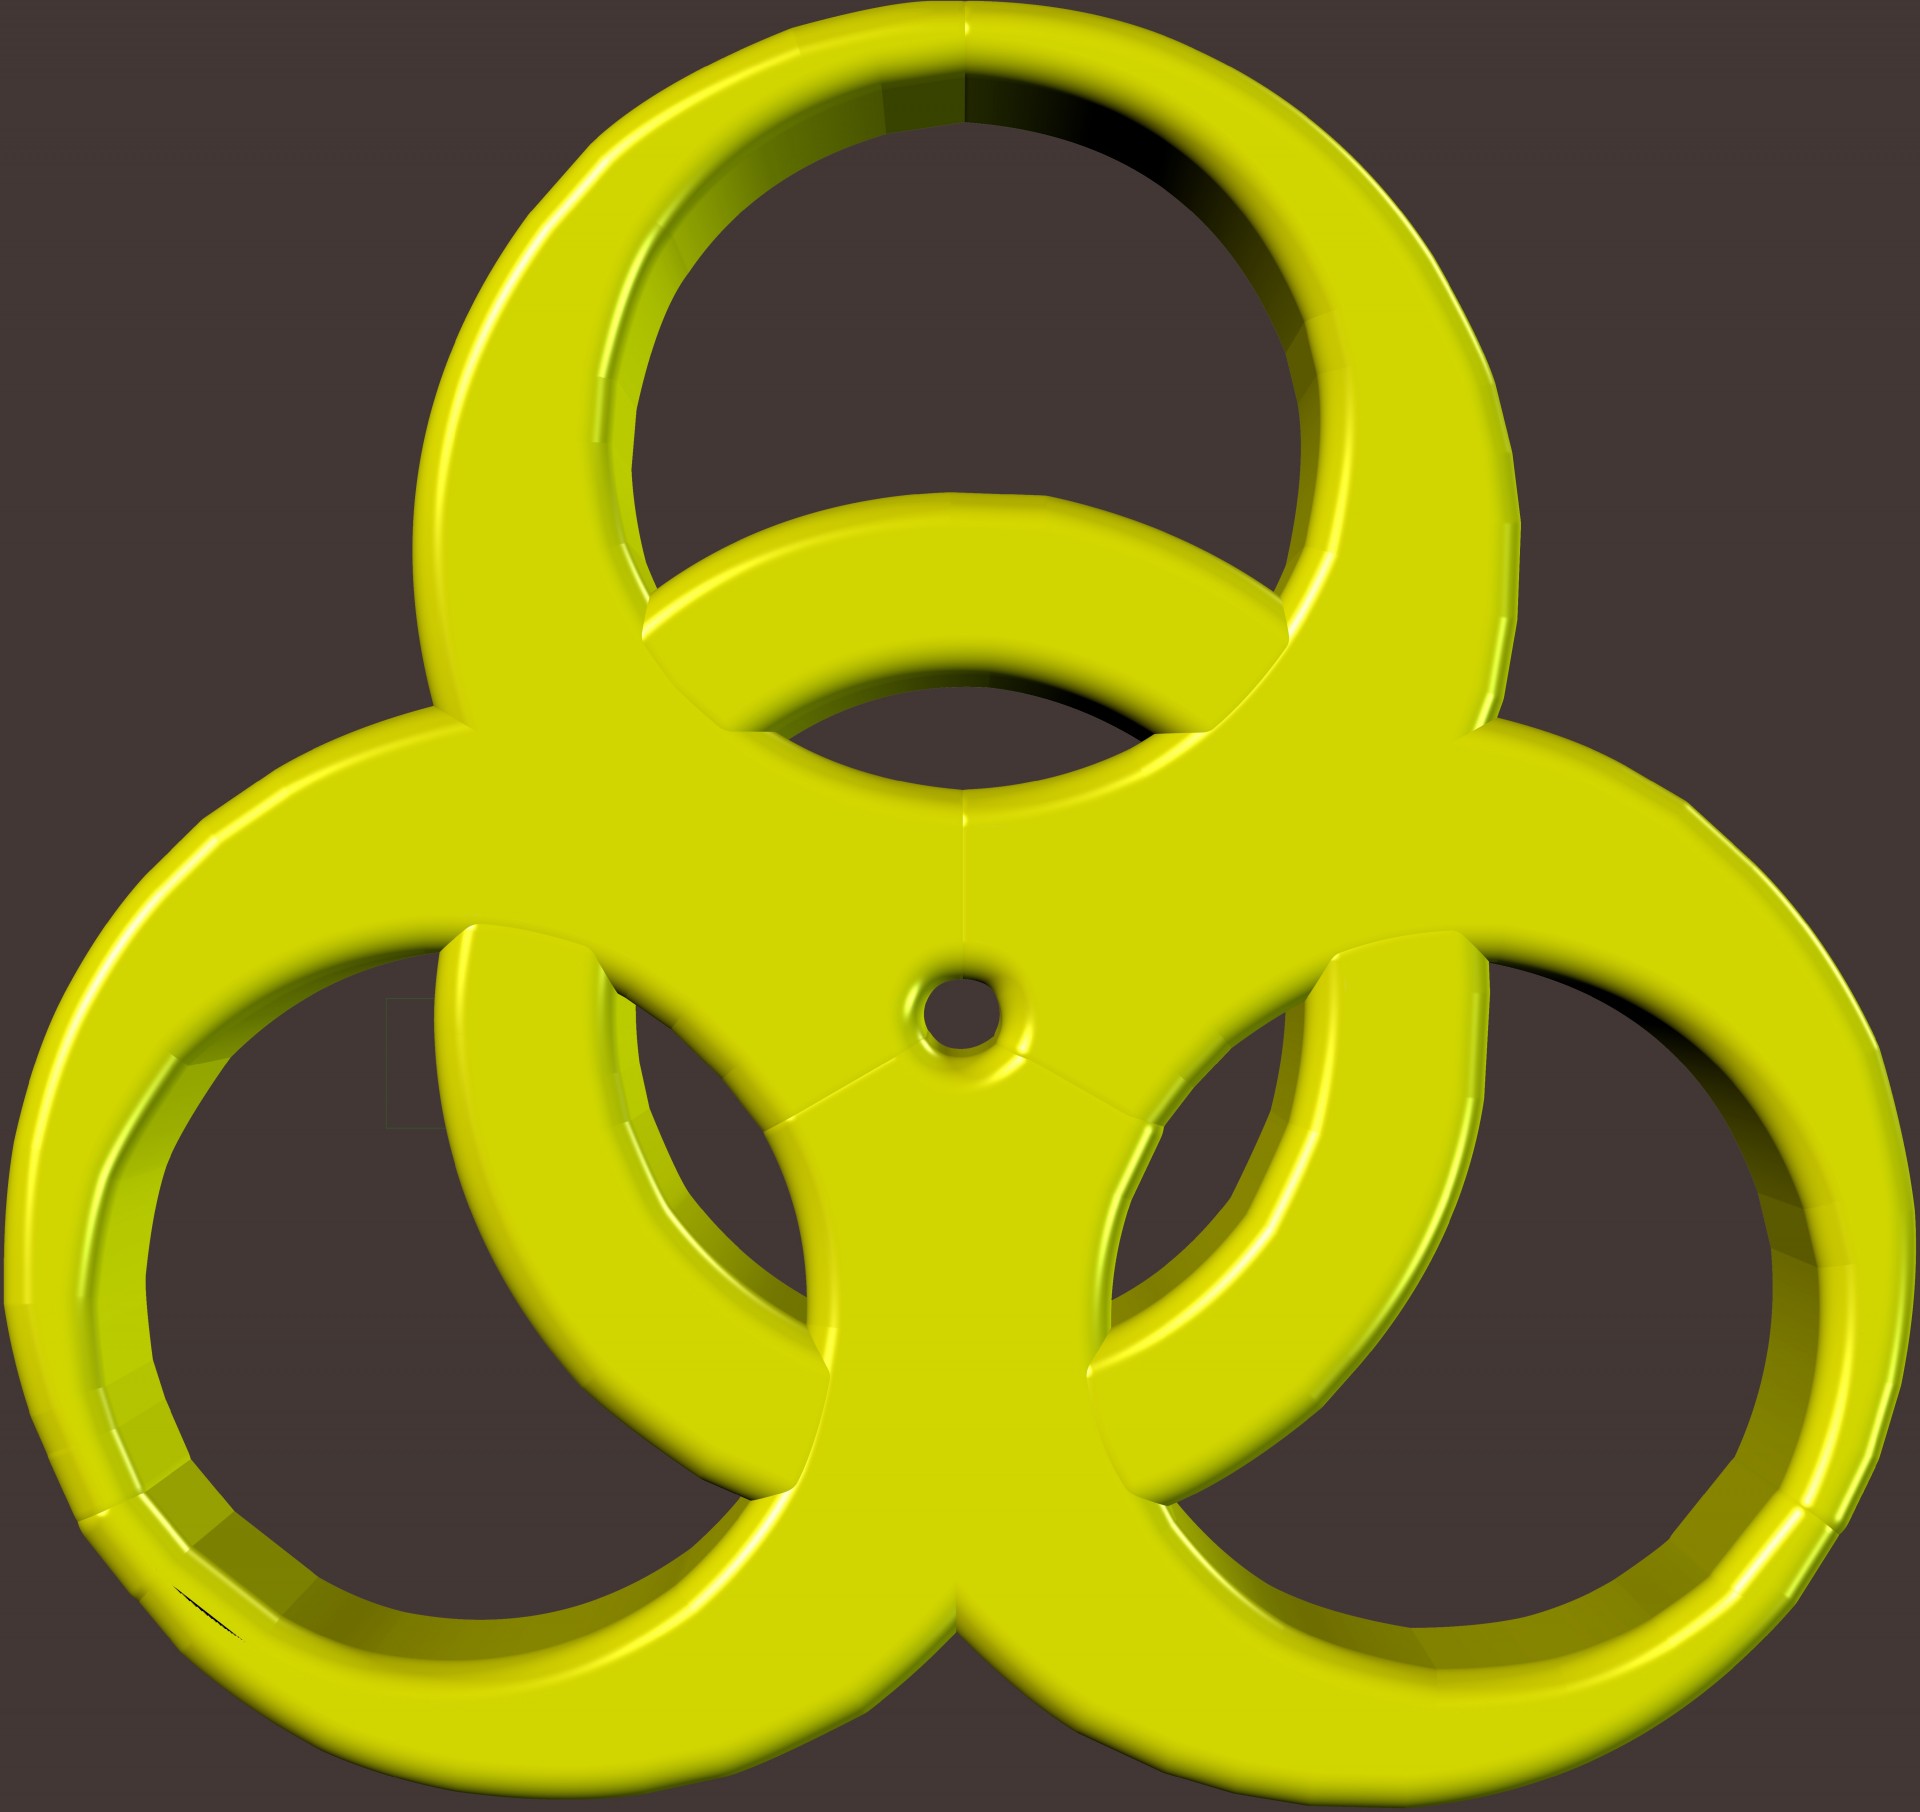 biohazard symbol bio free photo